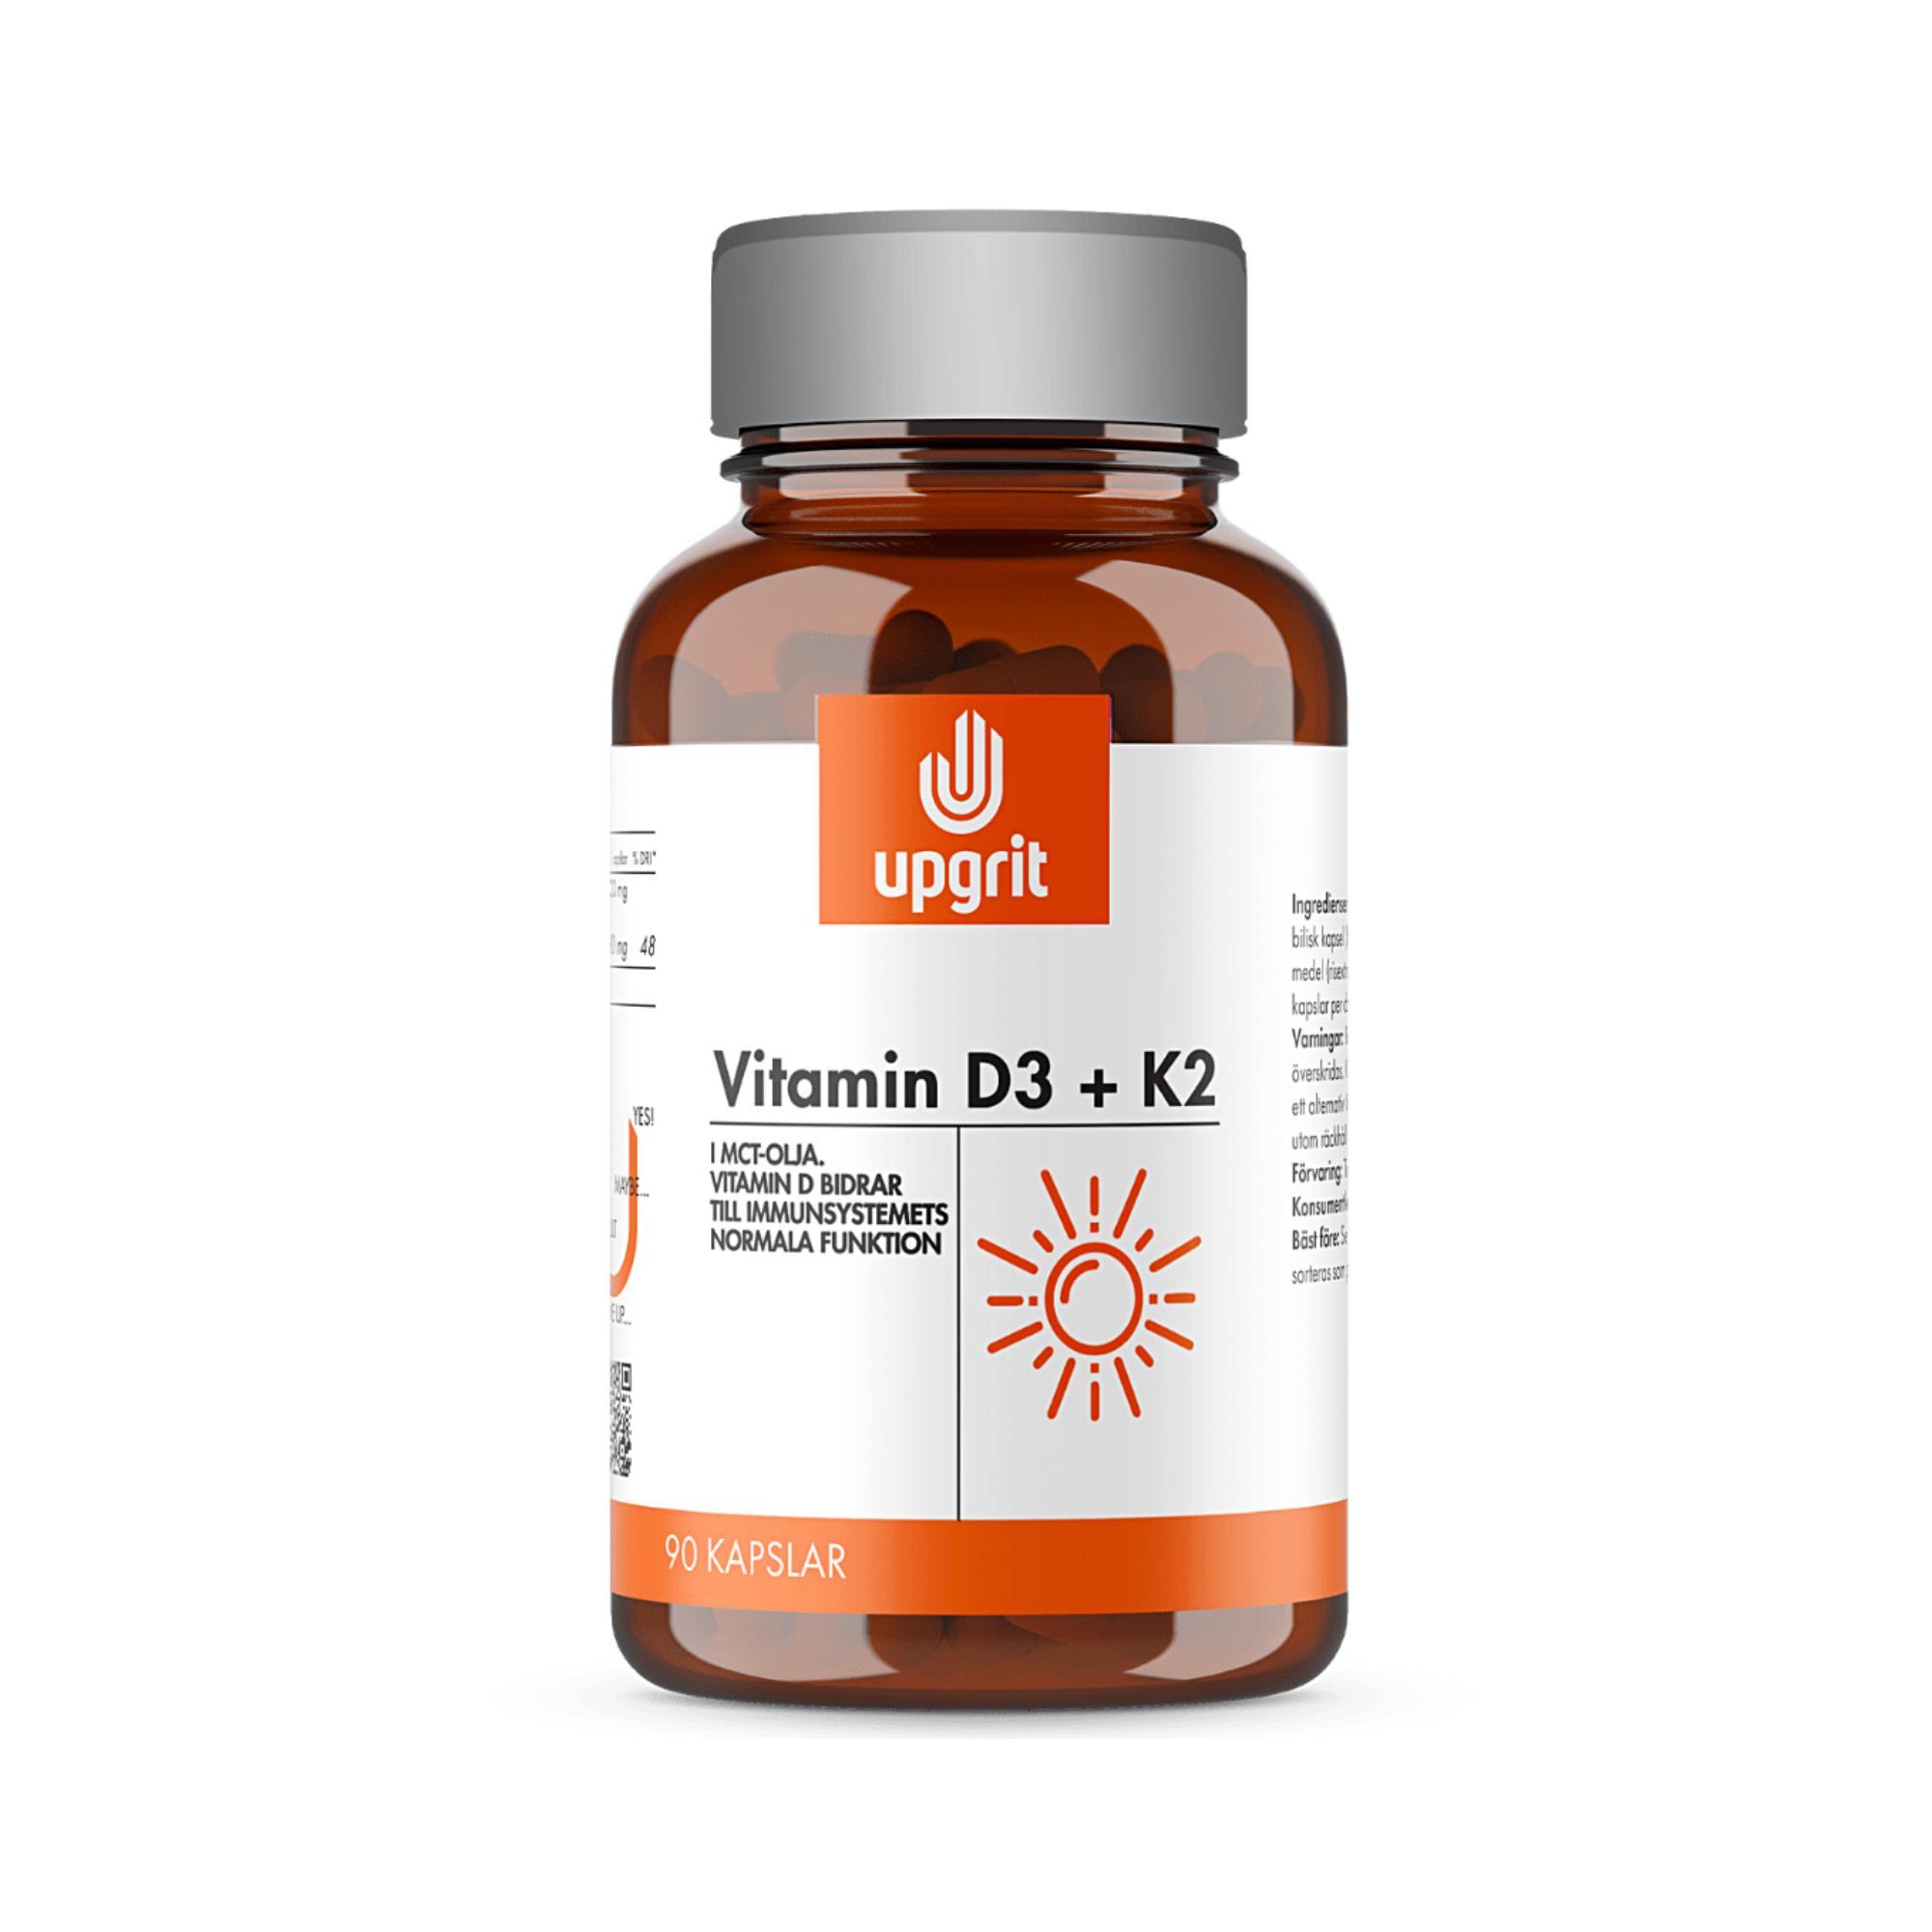 Upgrit Vitamin D3+K2, 90 kapslar